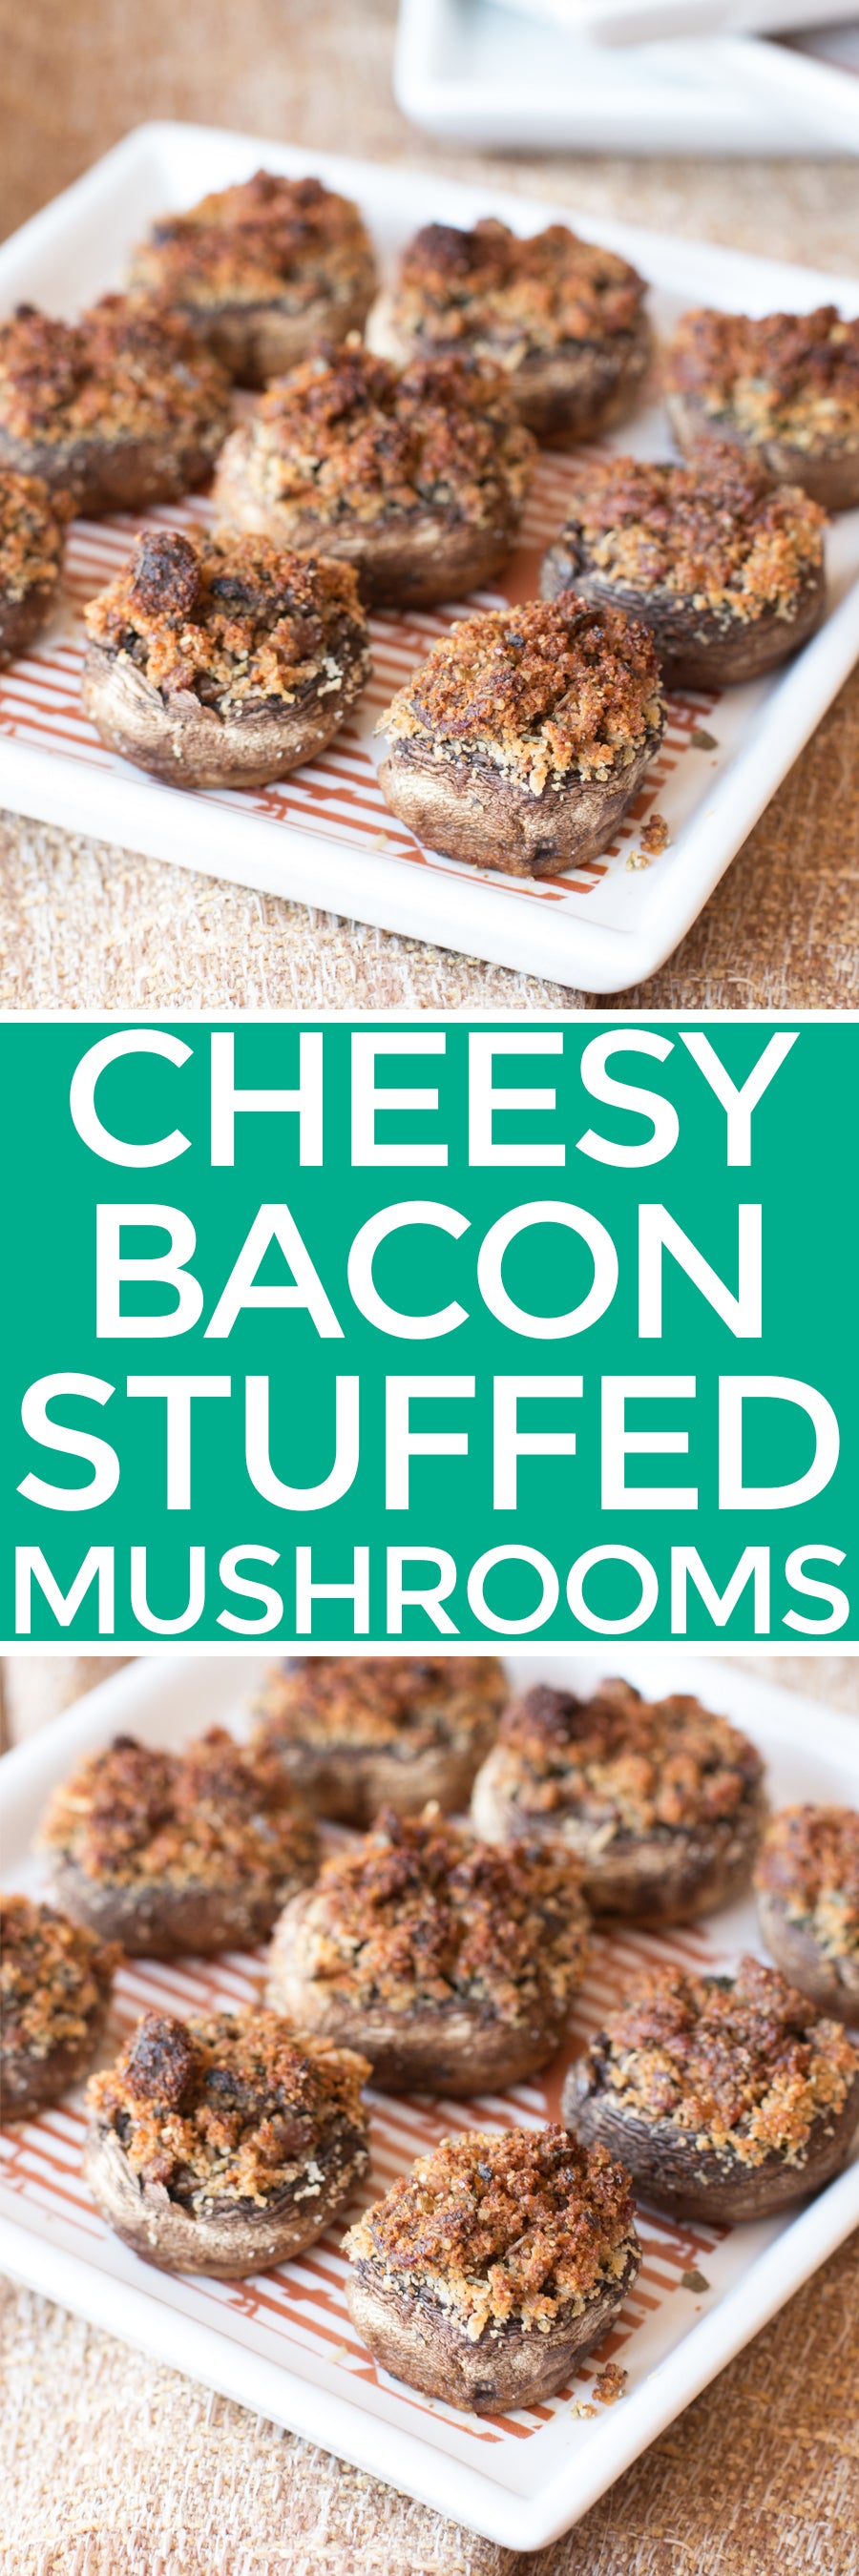 Cheesy Bacon Stuffed Mushrooms | pigofthemonth.com #appetizer #party